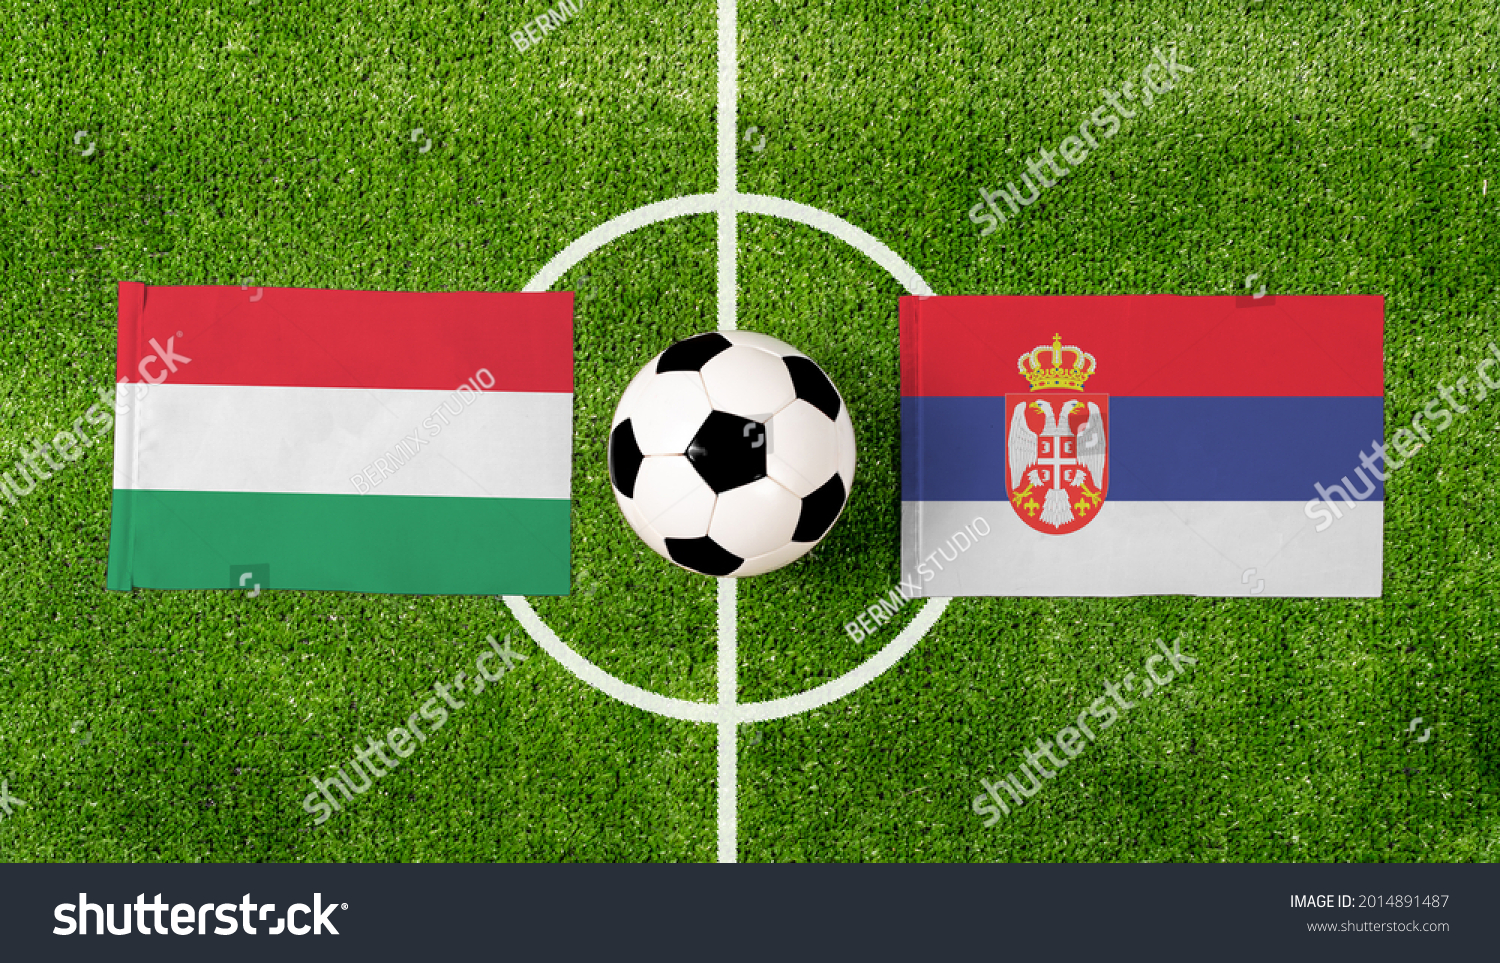 Hongaria vs serbia